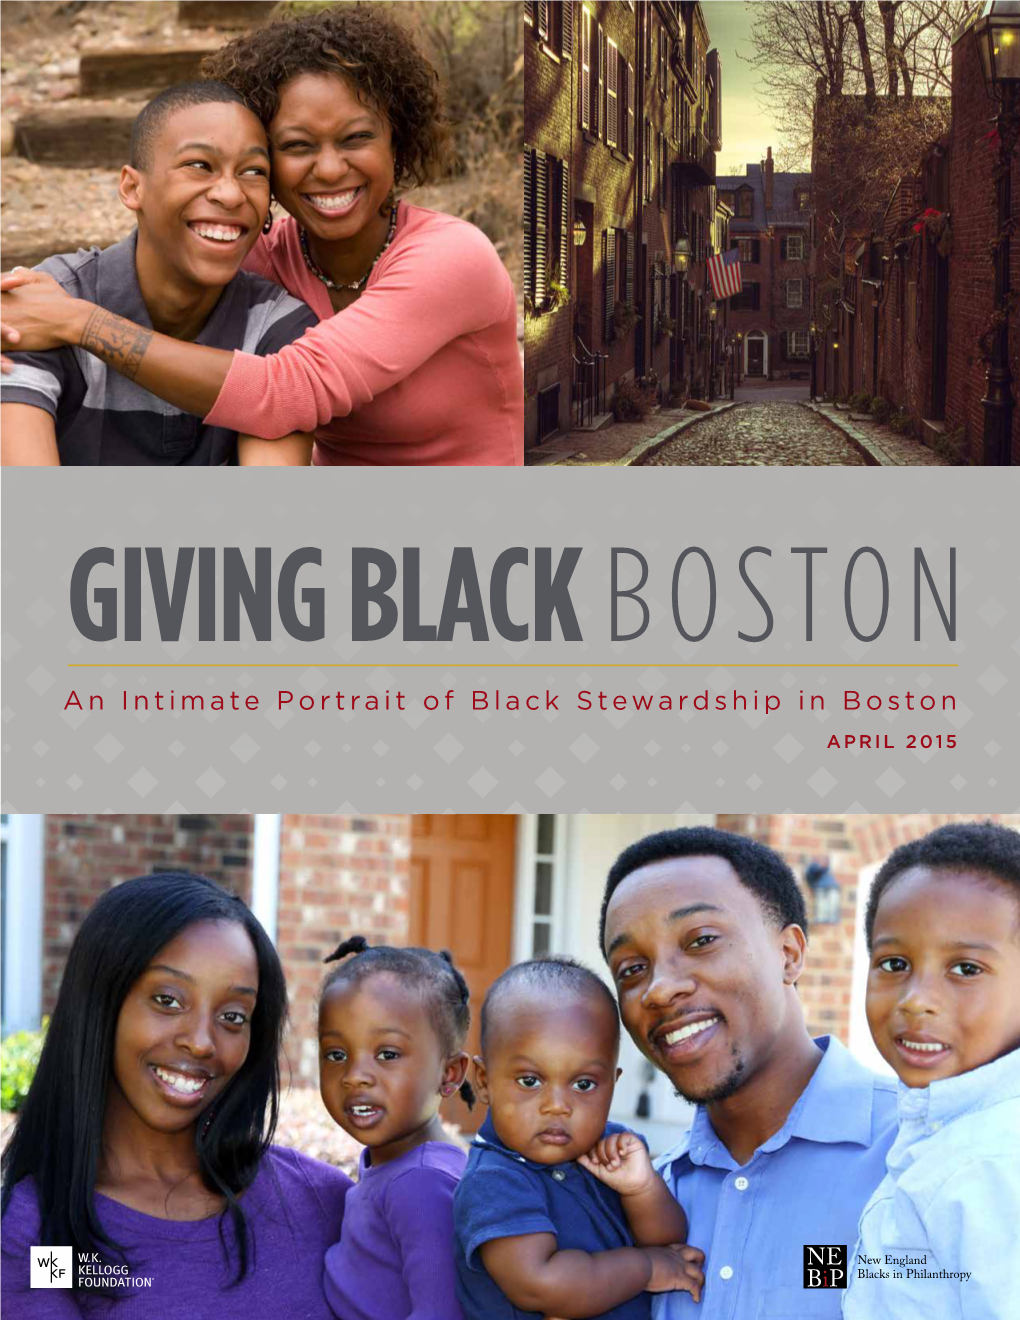 An Intimate Portrait of Black Stewardship in Boston